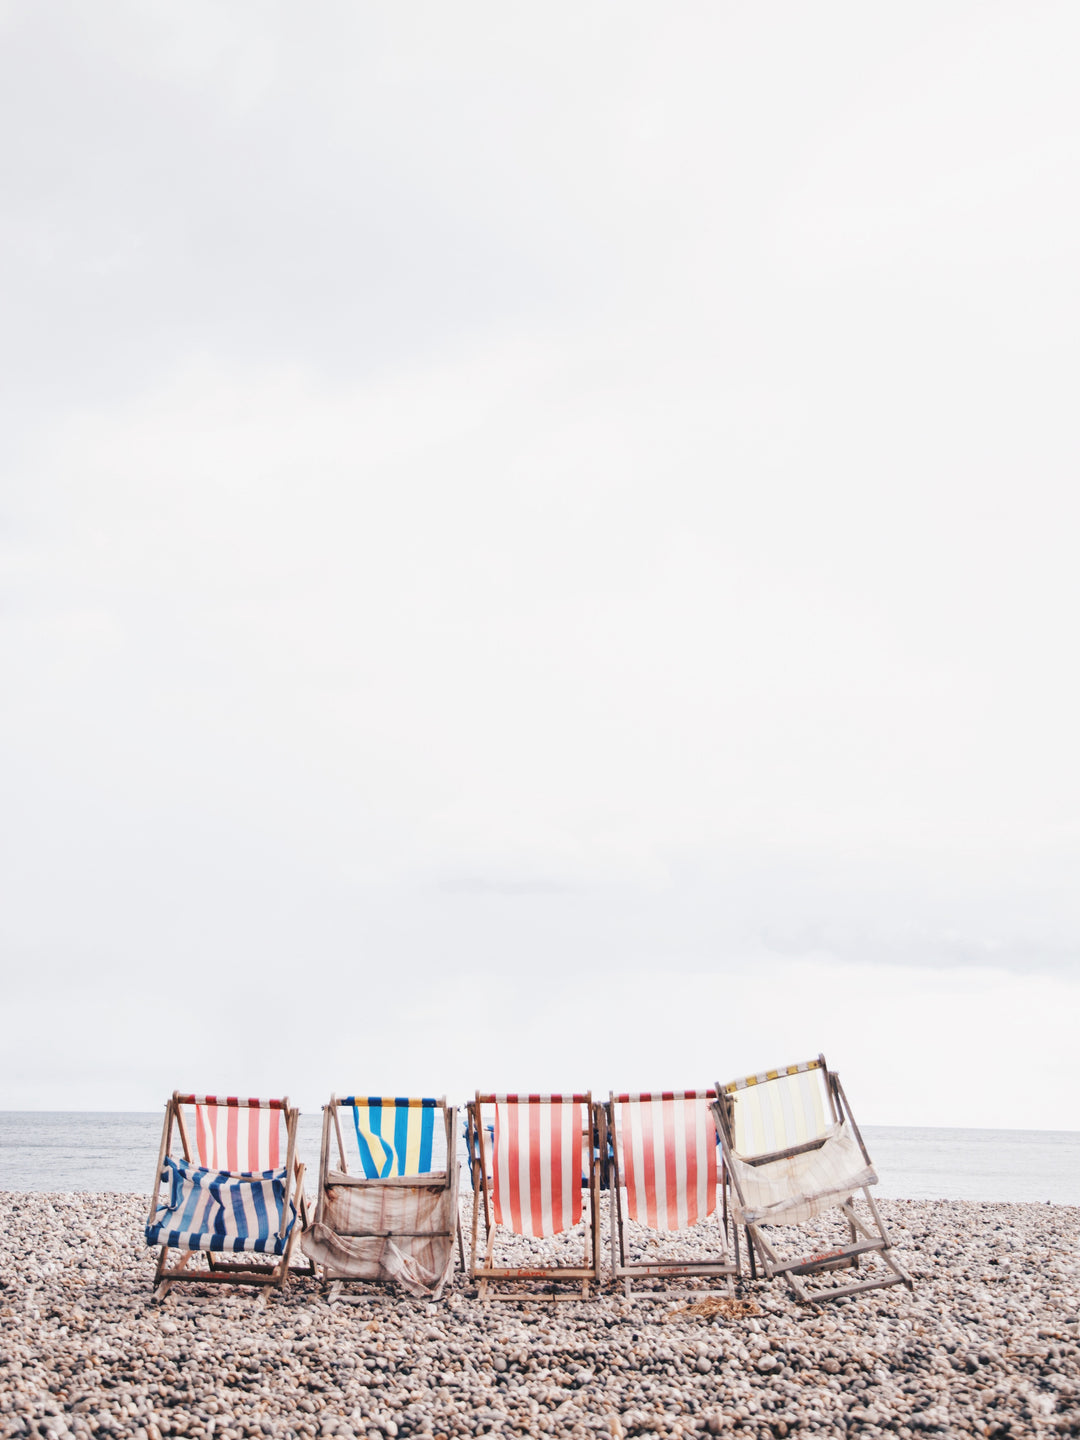 Seaton beach deck chairs in Cornwall Photo Print - Canvas - Framed Photo Print - Hampshire Prints